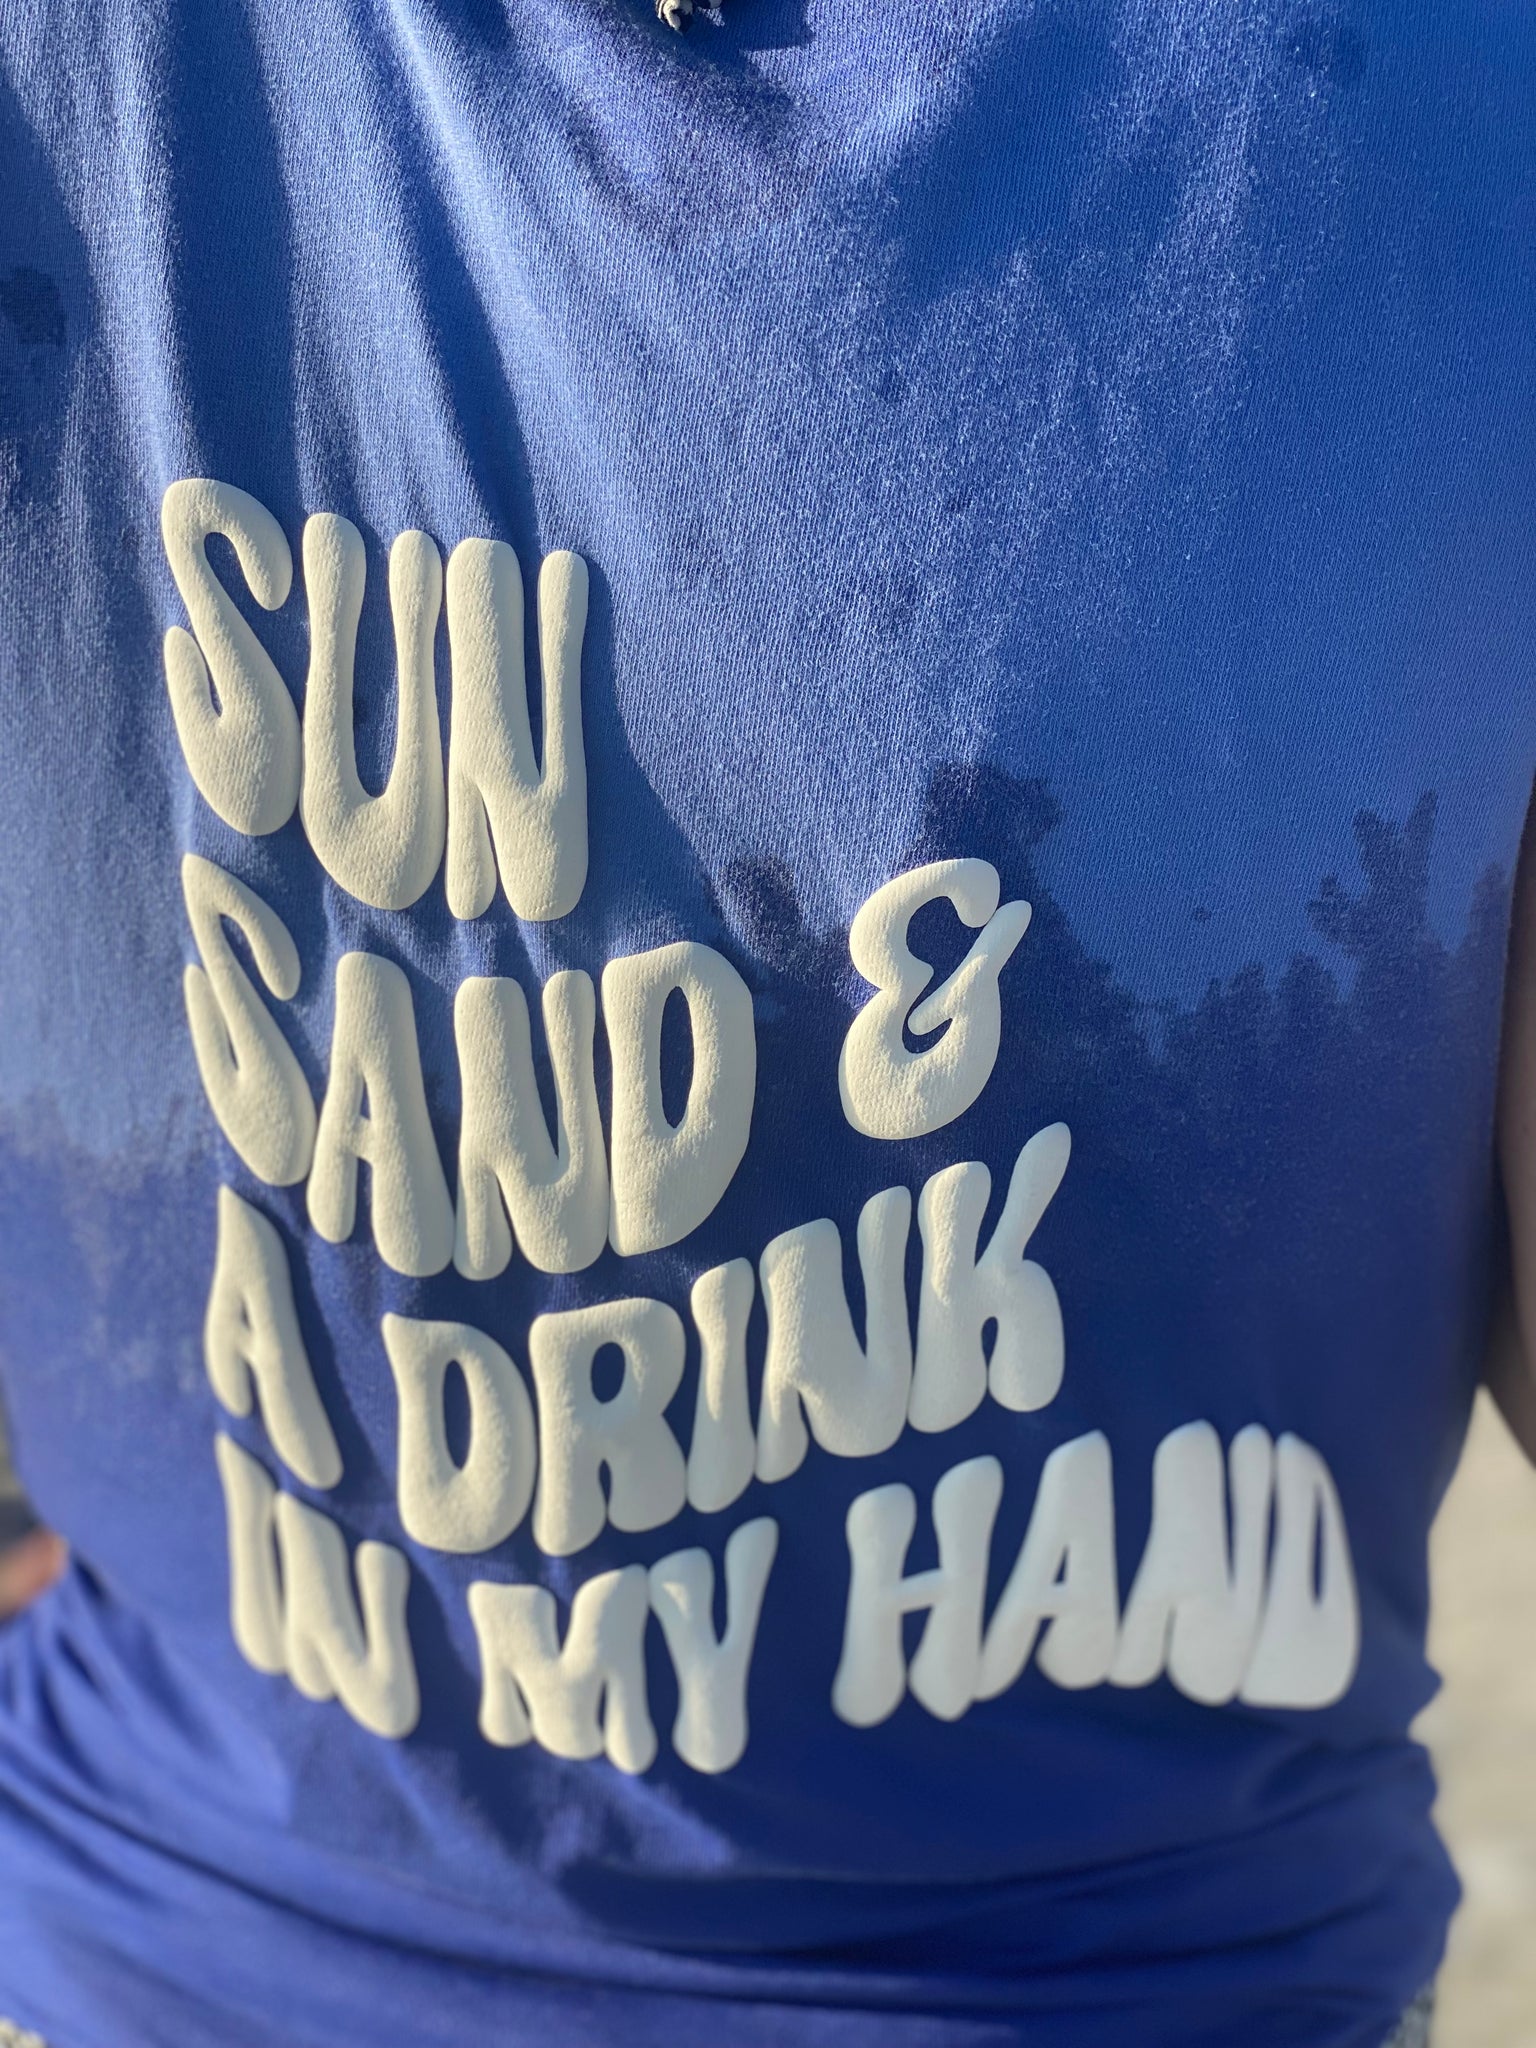 Sun Sand Drink in my hand